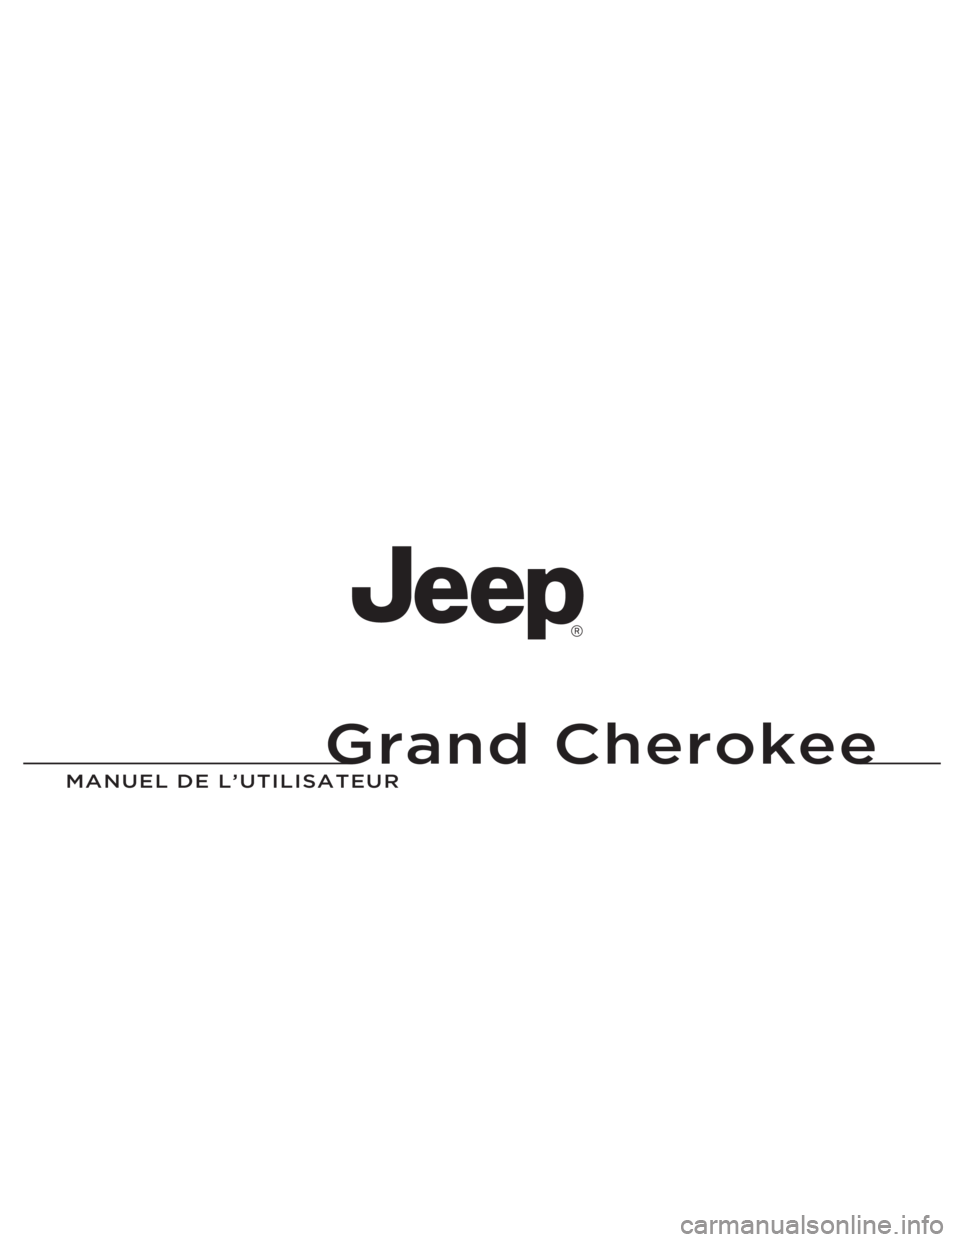 JEEP GRAND CHEROKEE 2013  Notice dentretien (in French) Grand Cherokee
MANUEL DE L’U\fILISA\f\’EUR
Grand Cherokee
14WK741-126-FRE-AAImprimé en Europe 14 